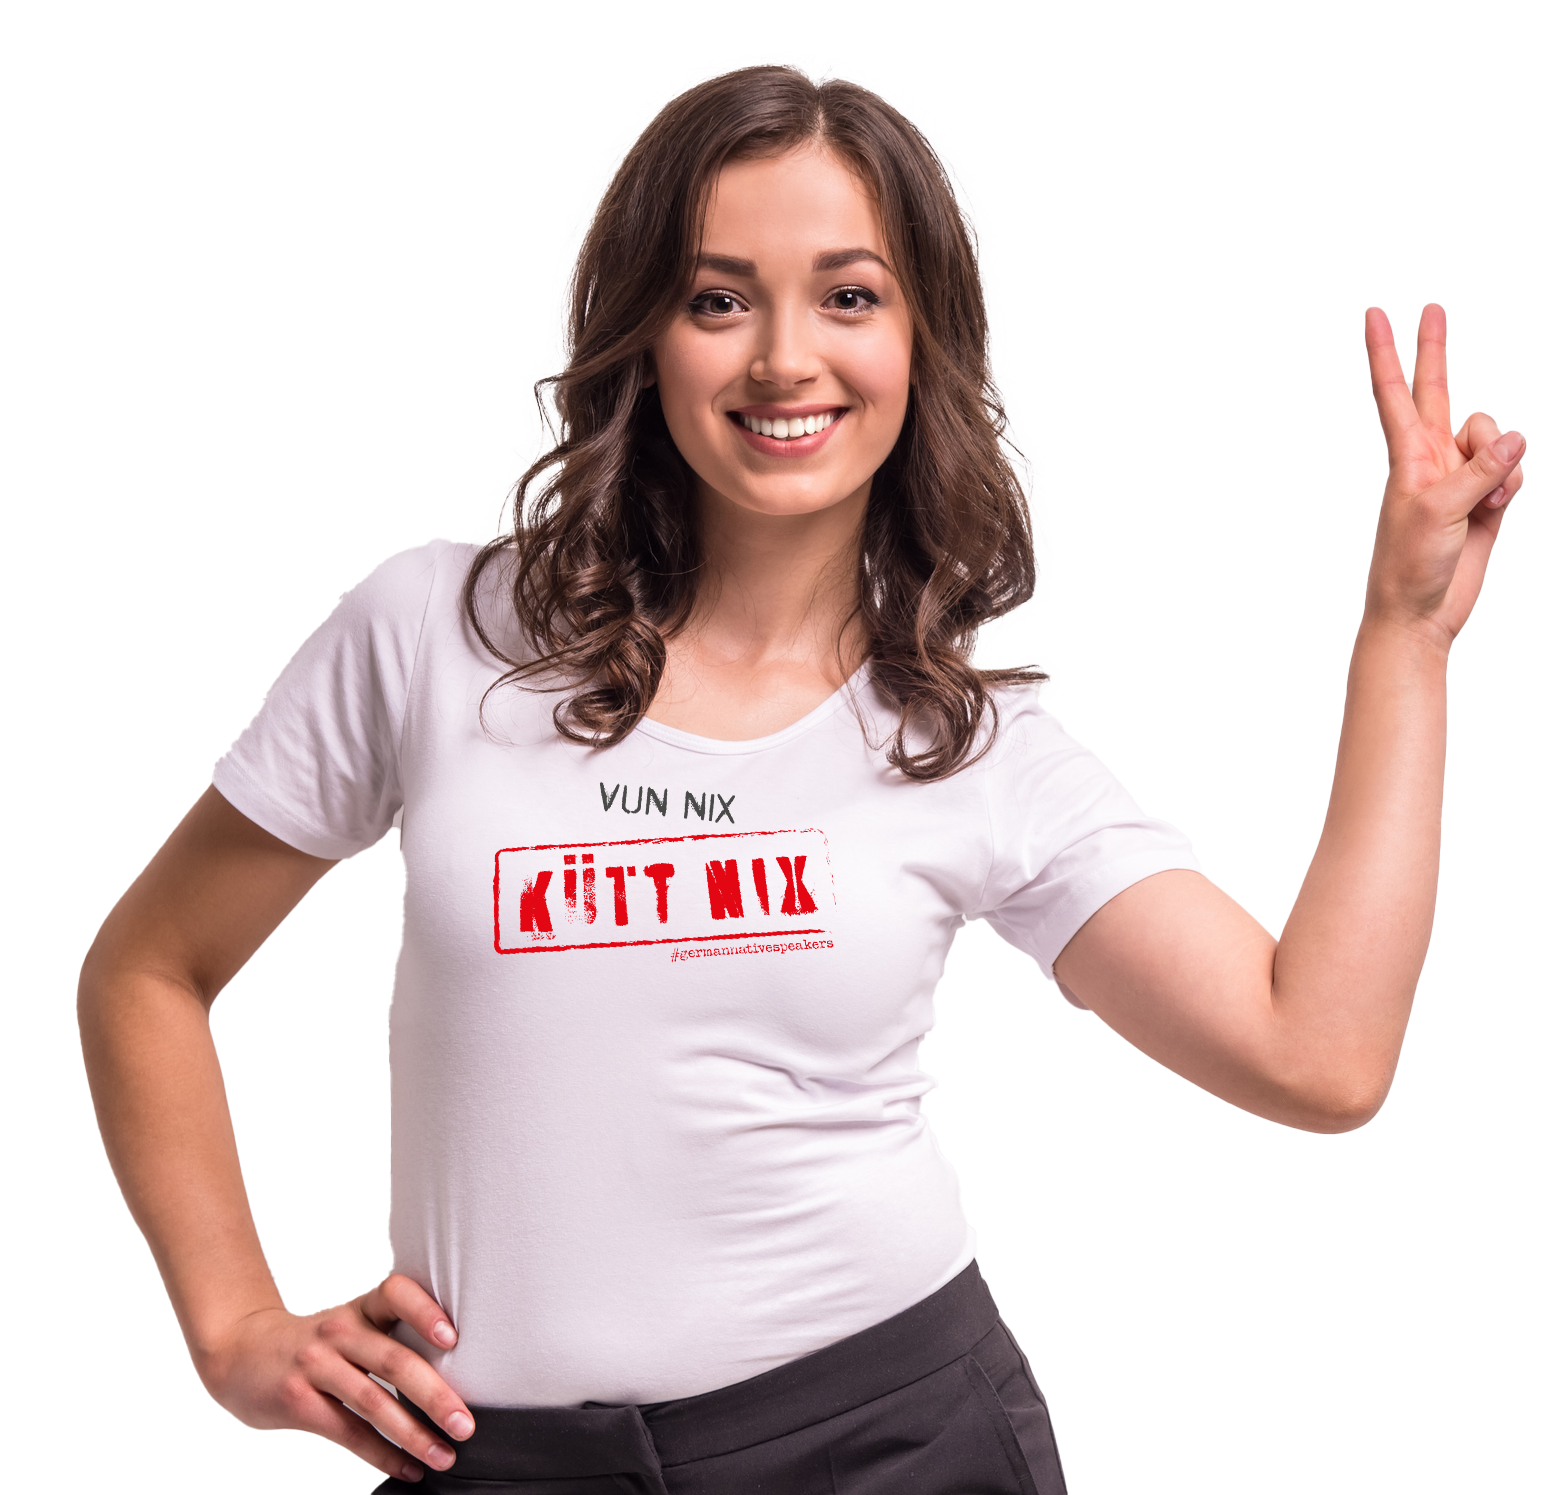 Kütt nix #germannativespeakers  - Damen Premiumshirt